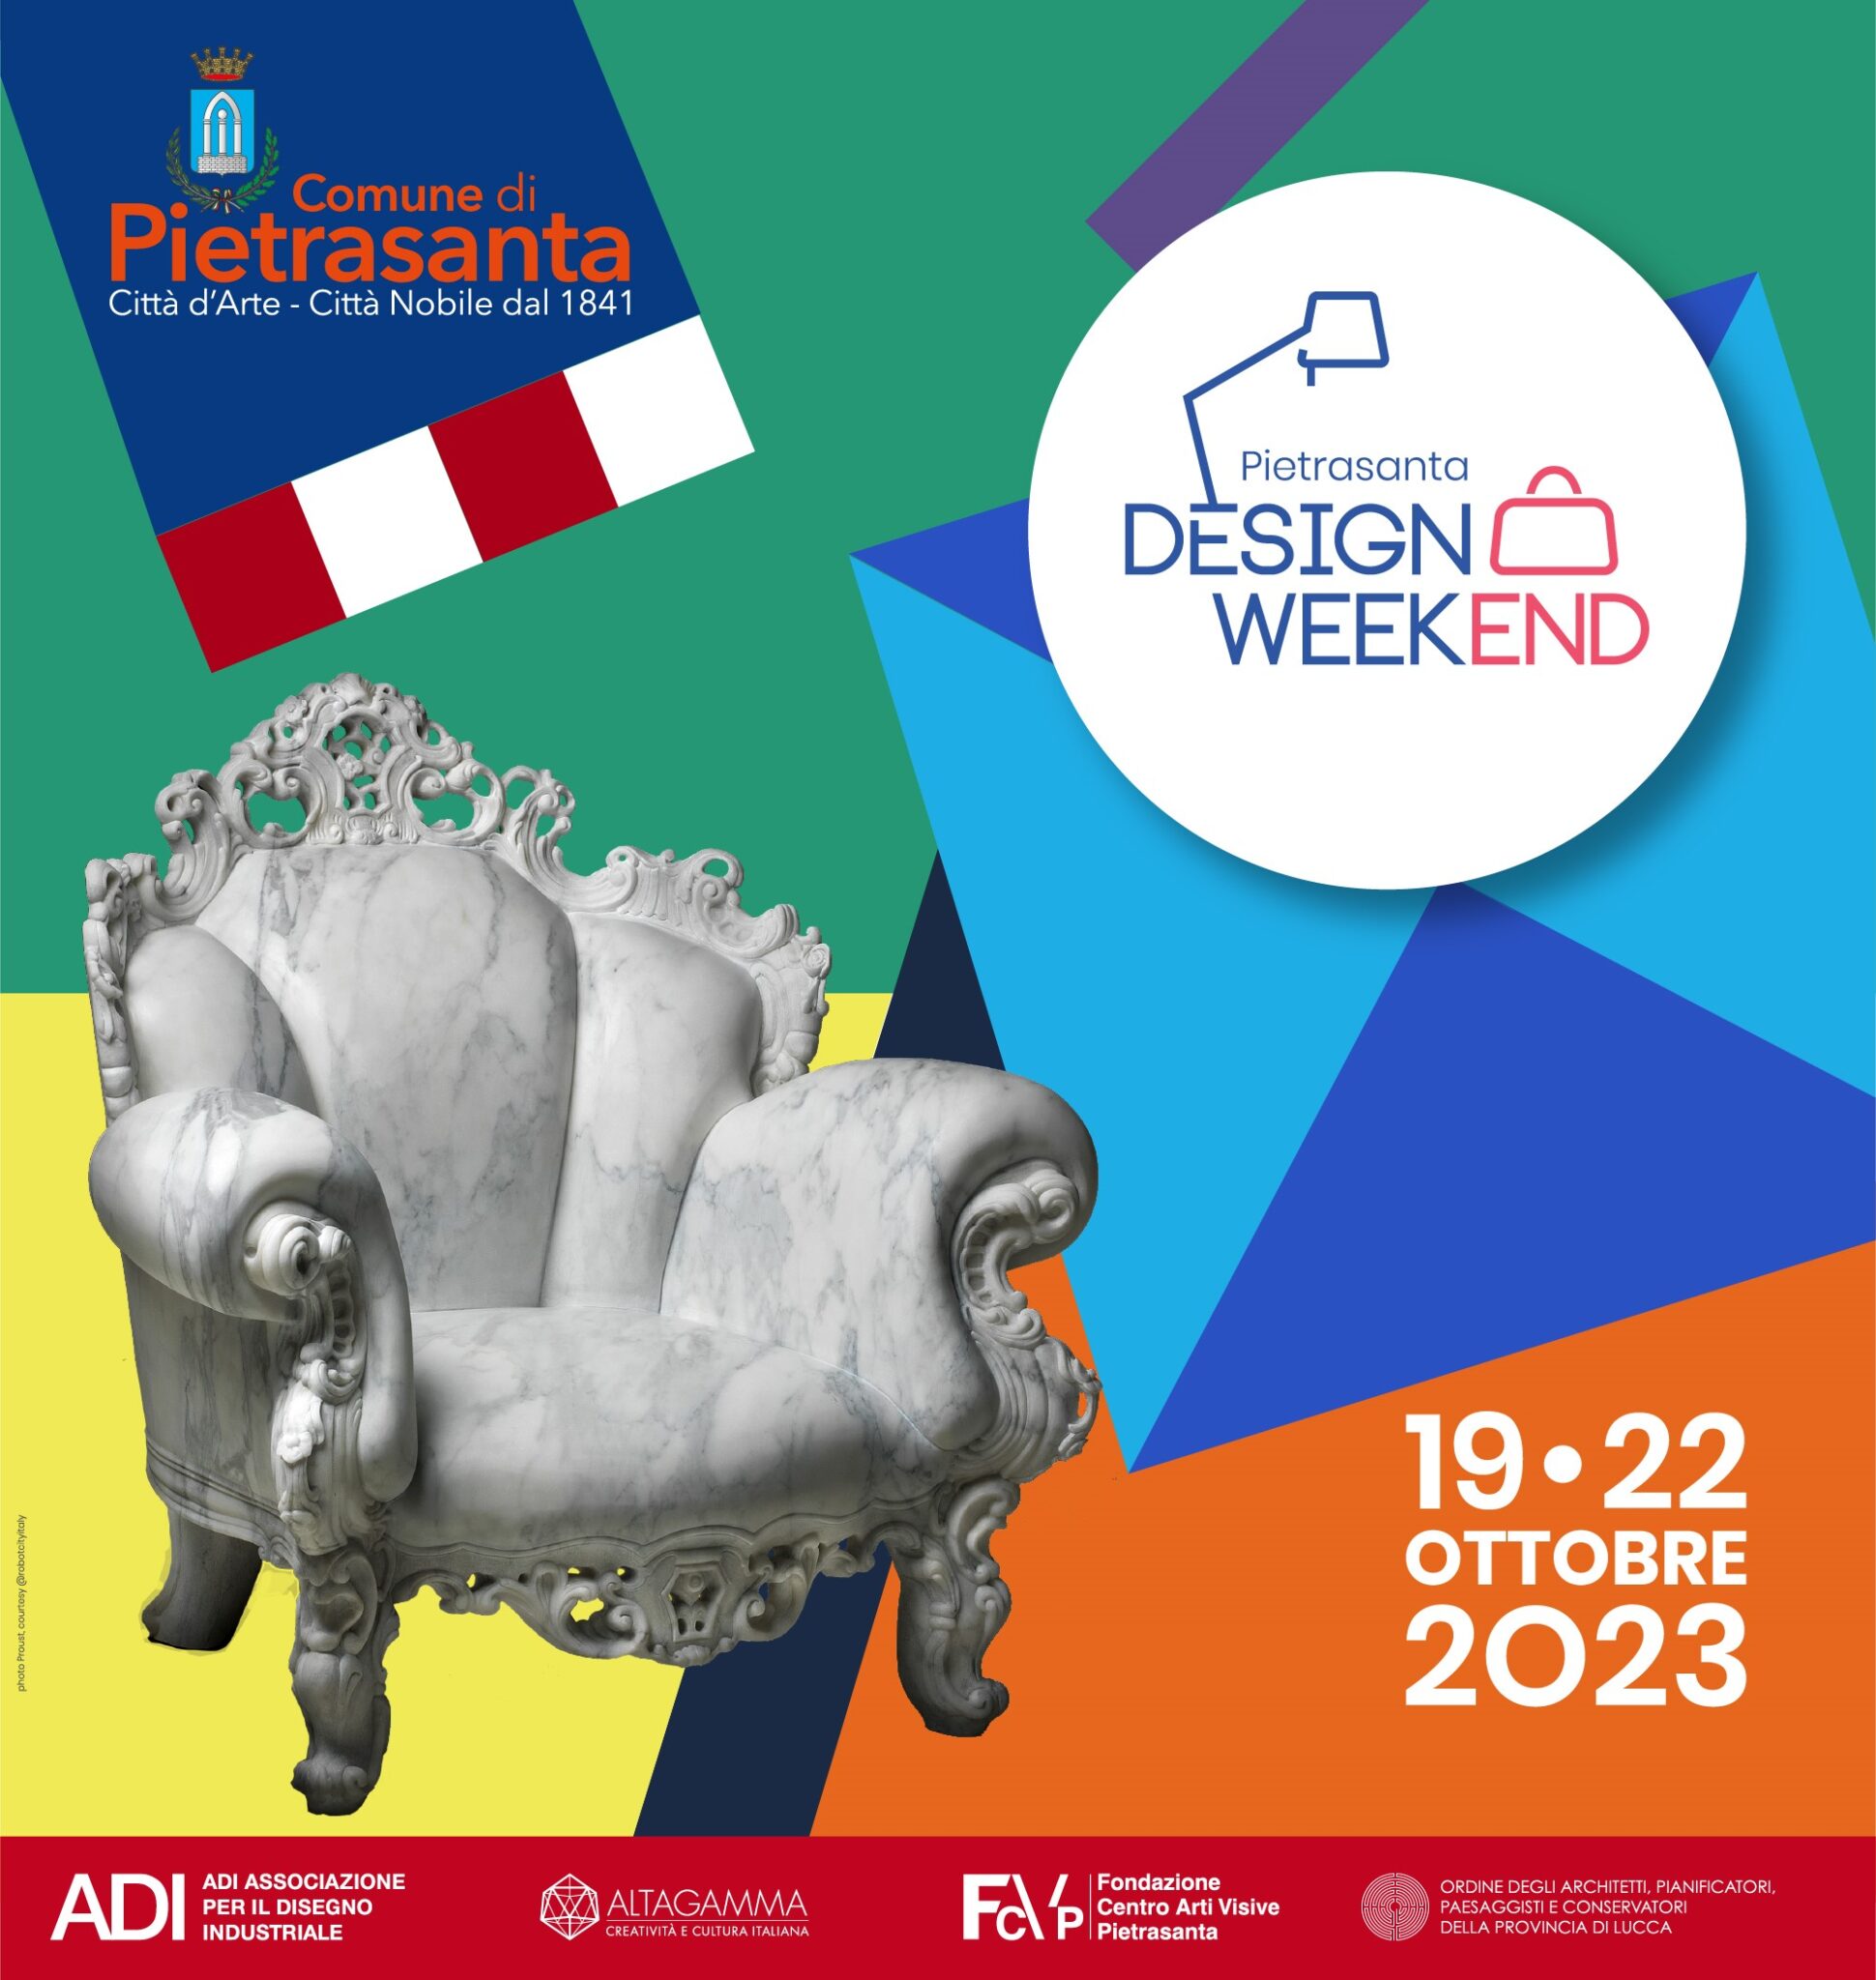 Pietrasanta Design Week-end. 19 – 22 ottobre 2023